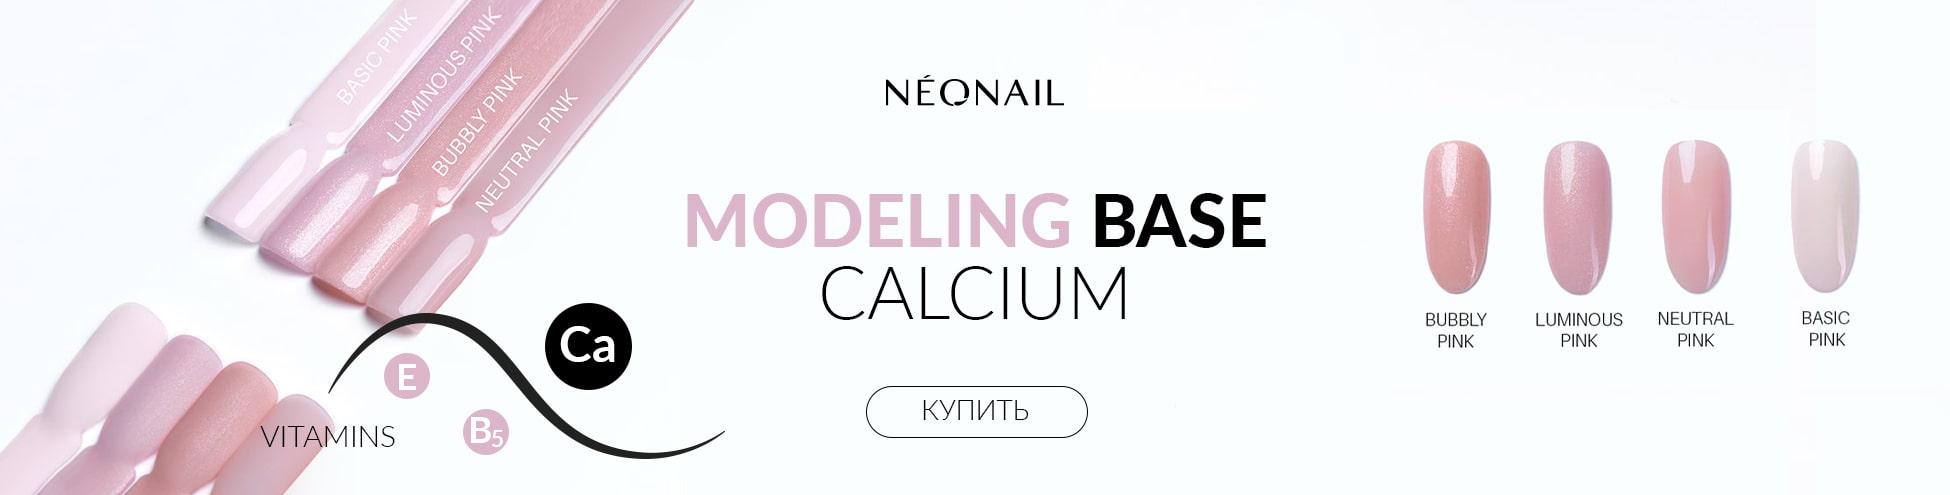 Modeling Base Calcium